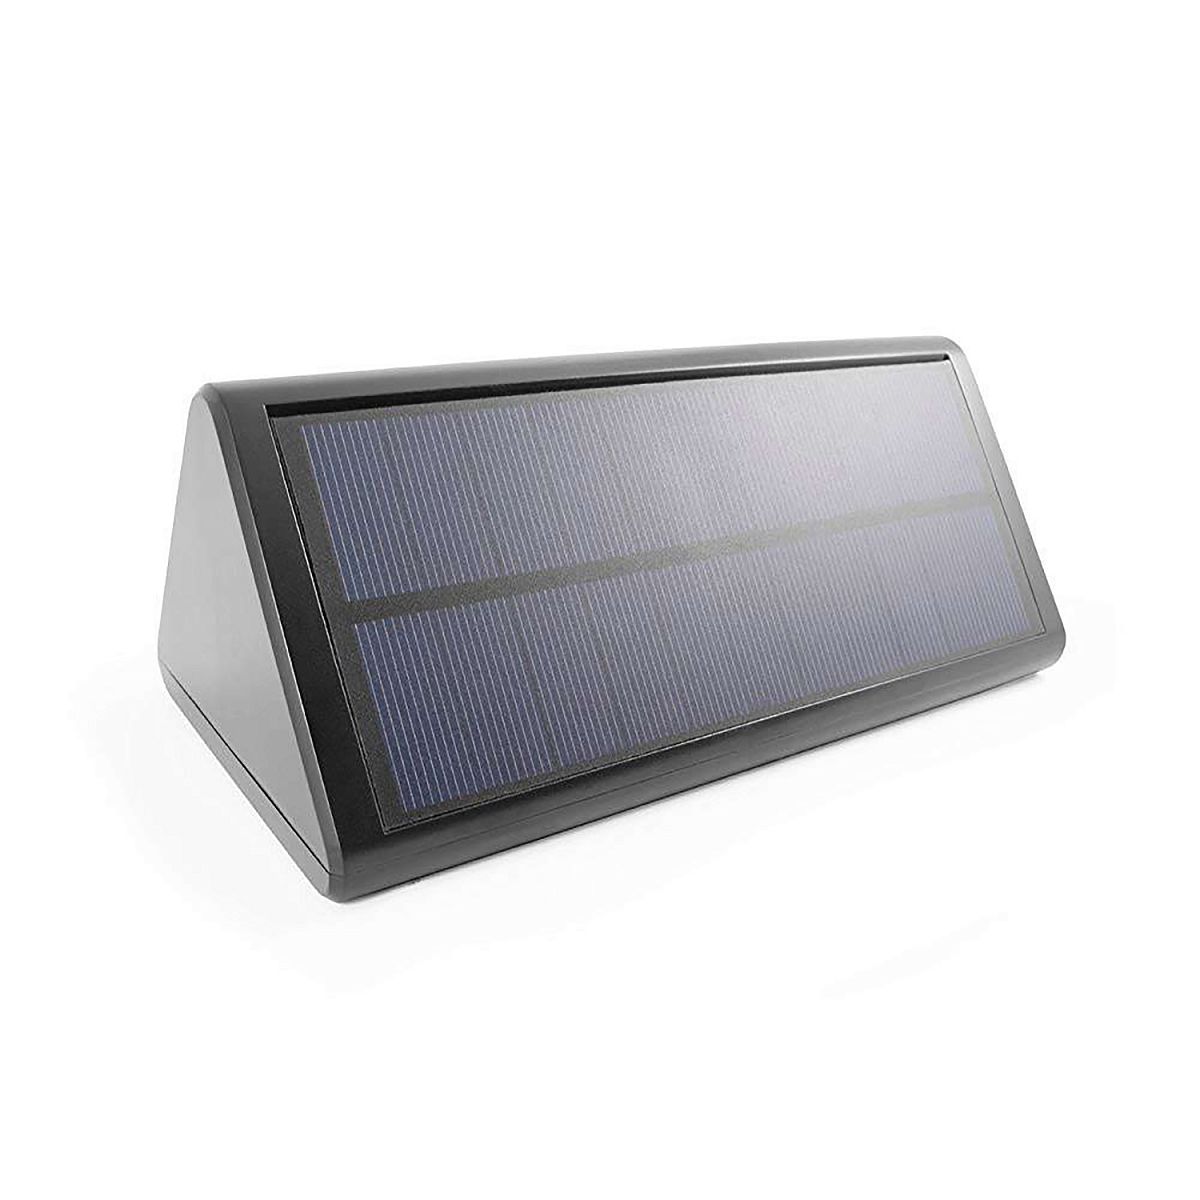 ECO Wedge Pro Premium Solar Security Lights Sensor for Outside